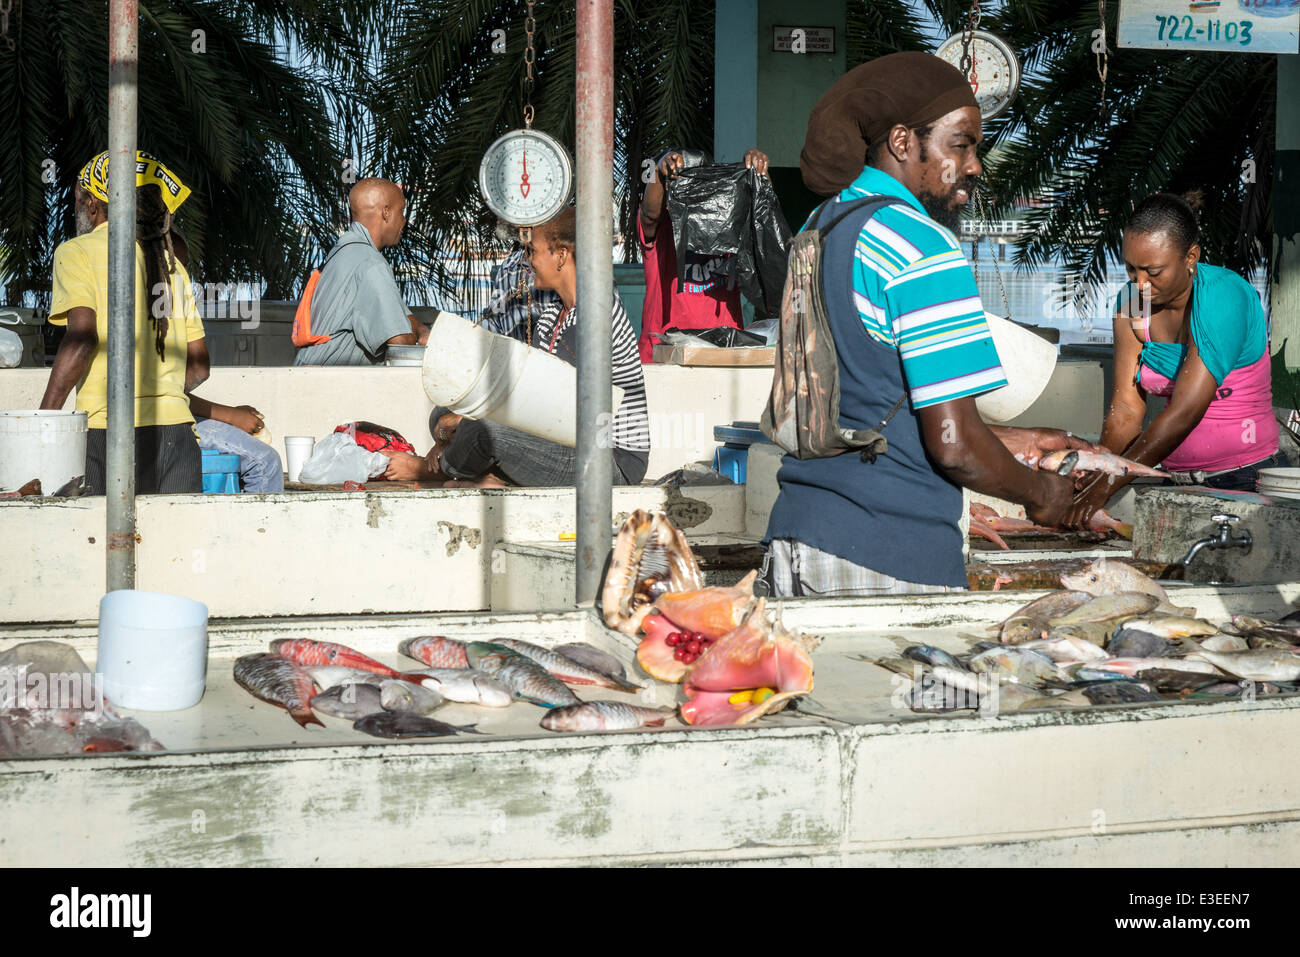 St. Johns Public Fish Market, St. John's, Antigua Stock Photo ...